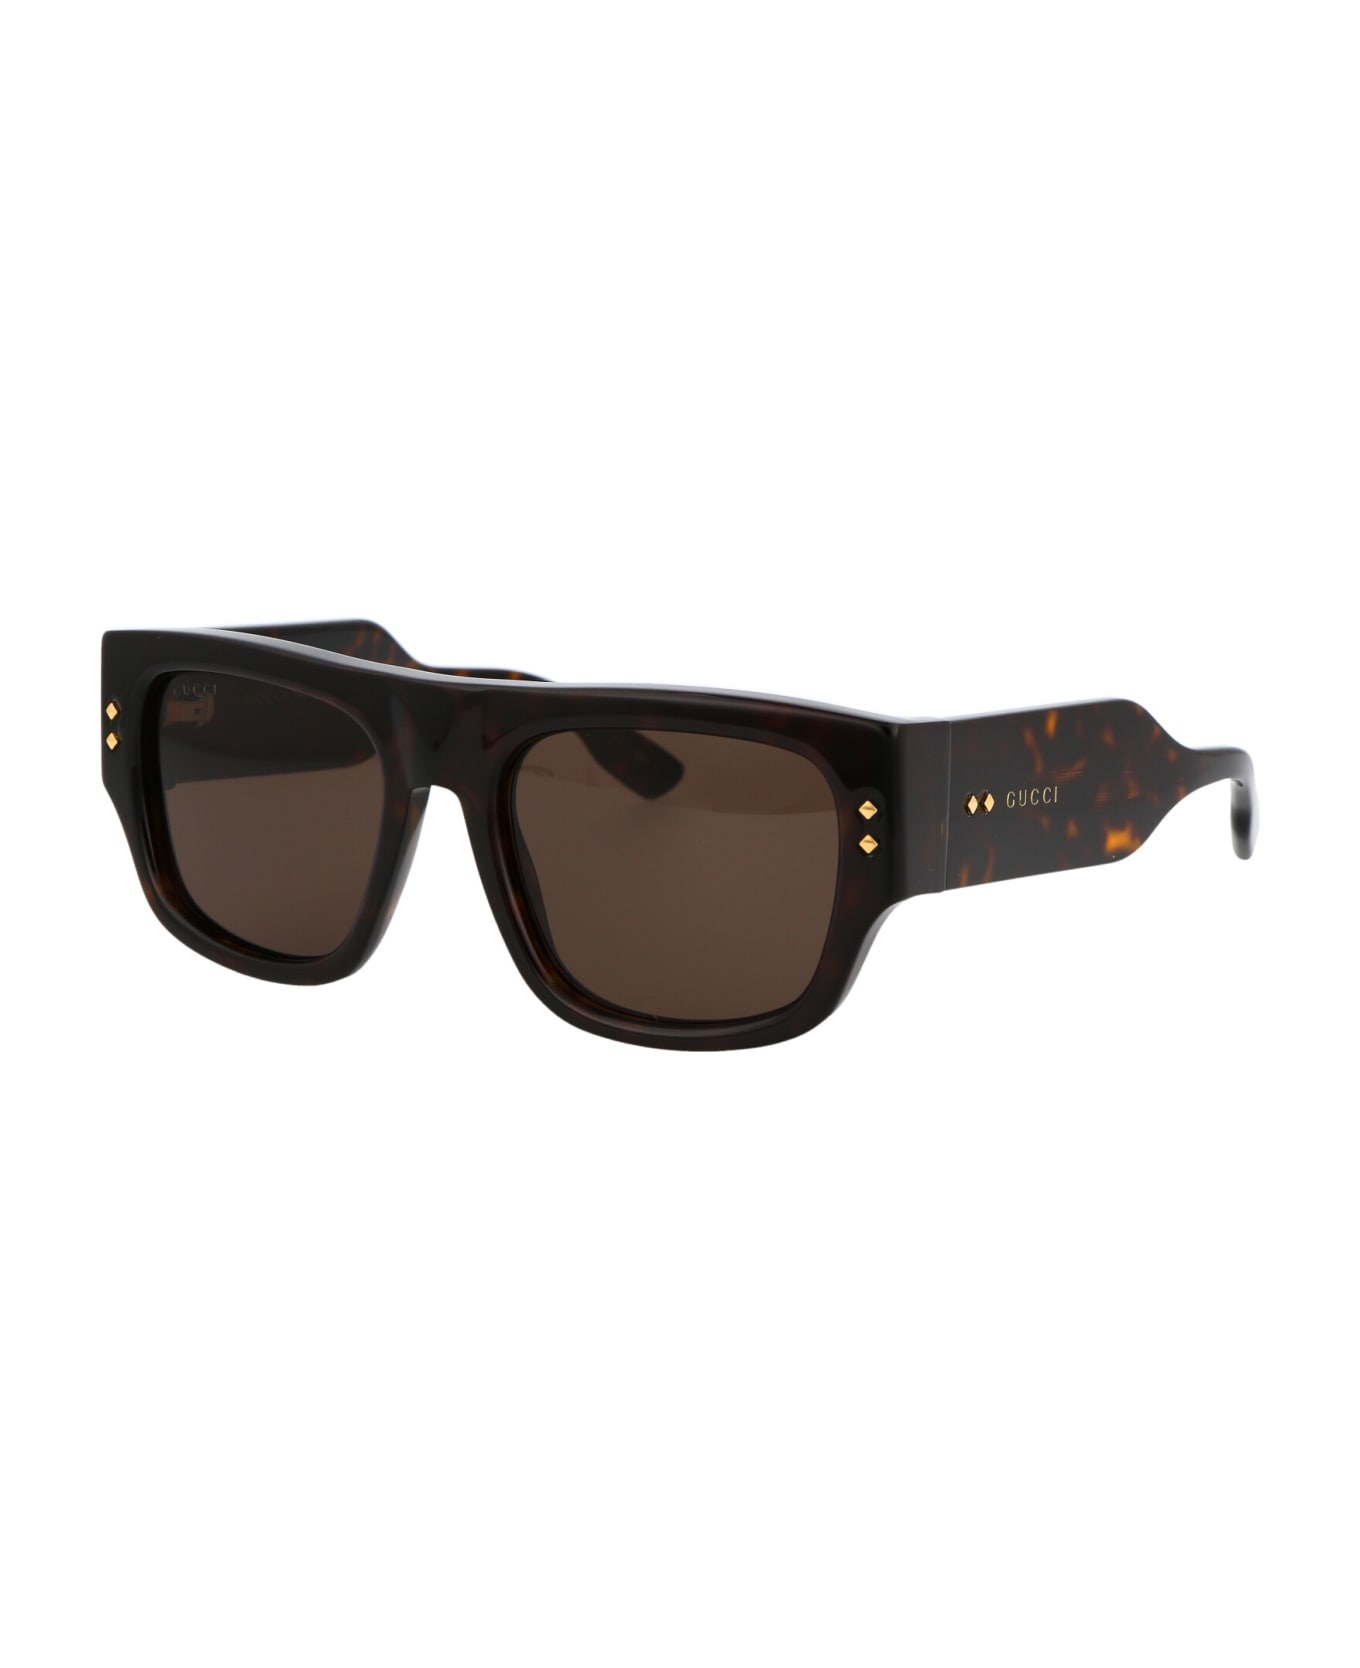 Gucci Eyewear Gg1262s Sunglasses - 002 HAVANA HAVANA BROWN